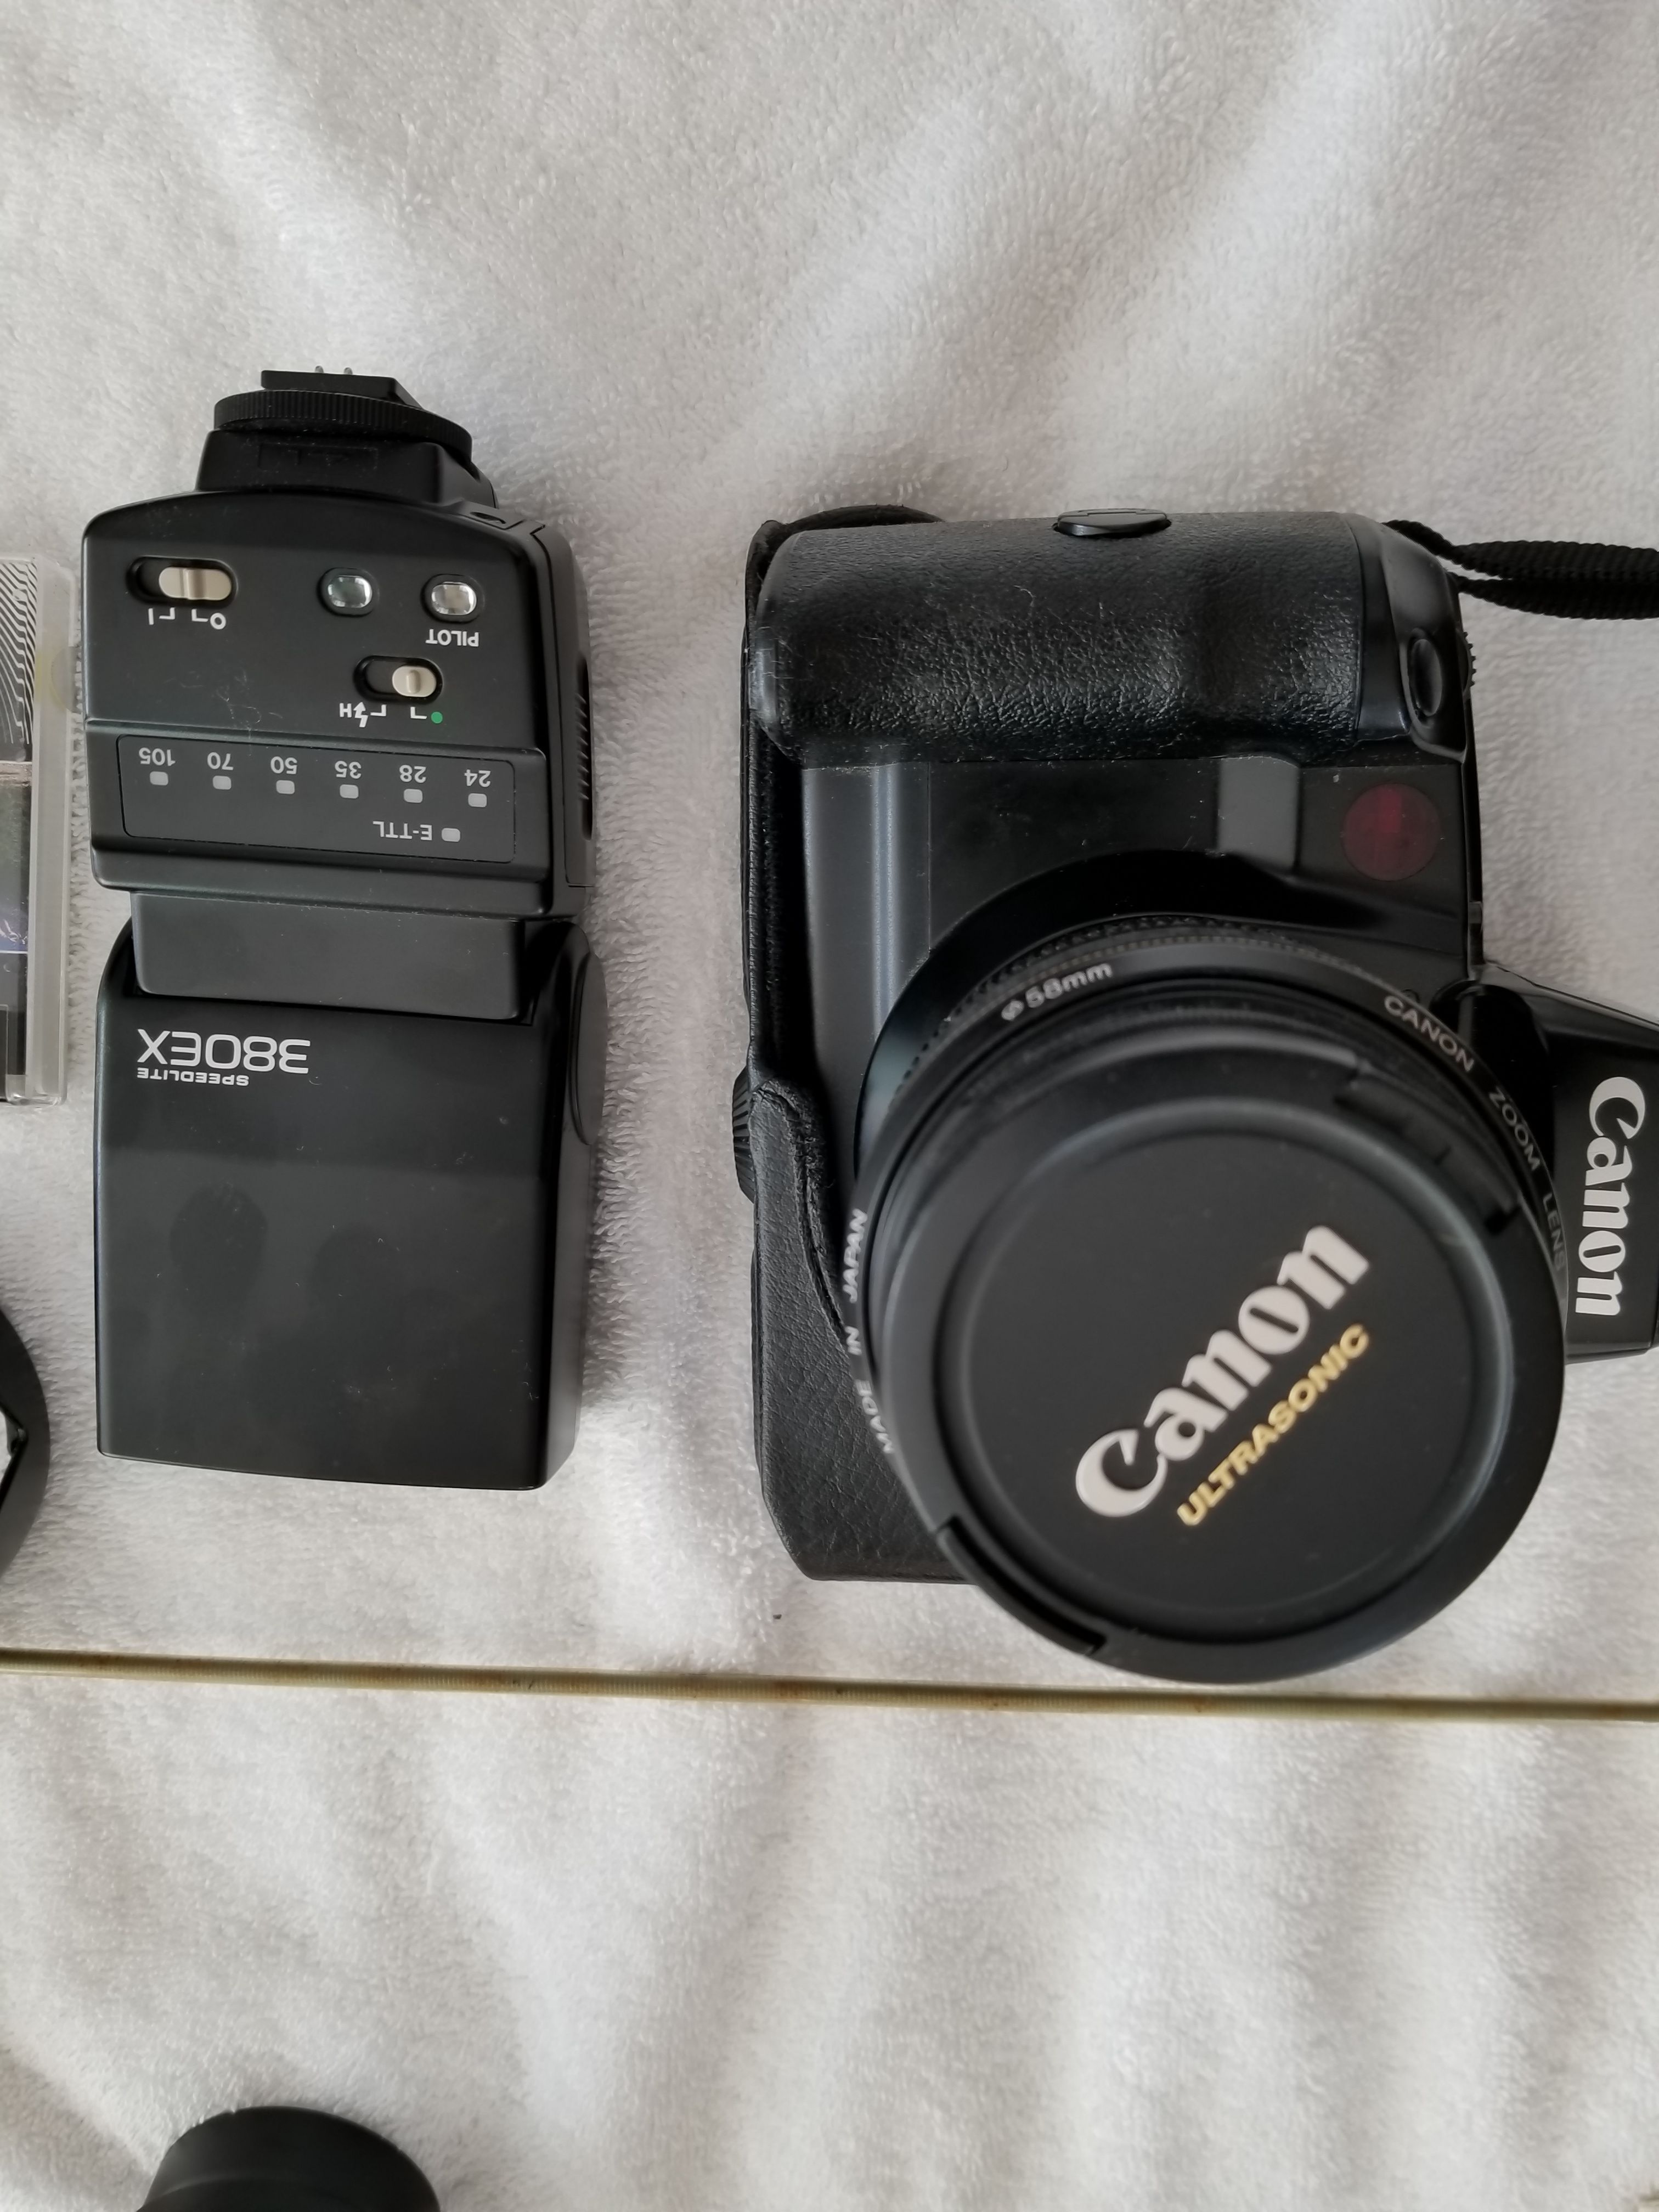 CANON SLR EOS A2E FILM CAMERA WITH Canon 380ex speedlite FLASH, 58 mm lens & accessories